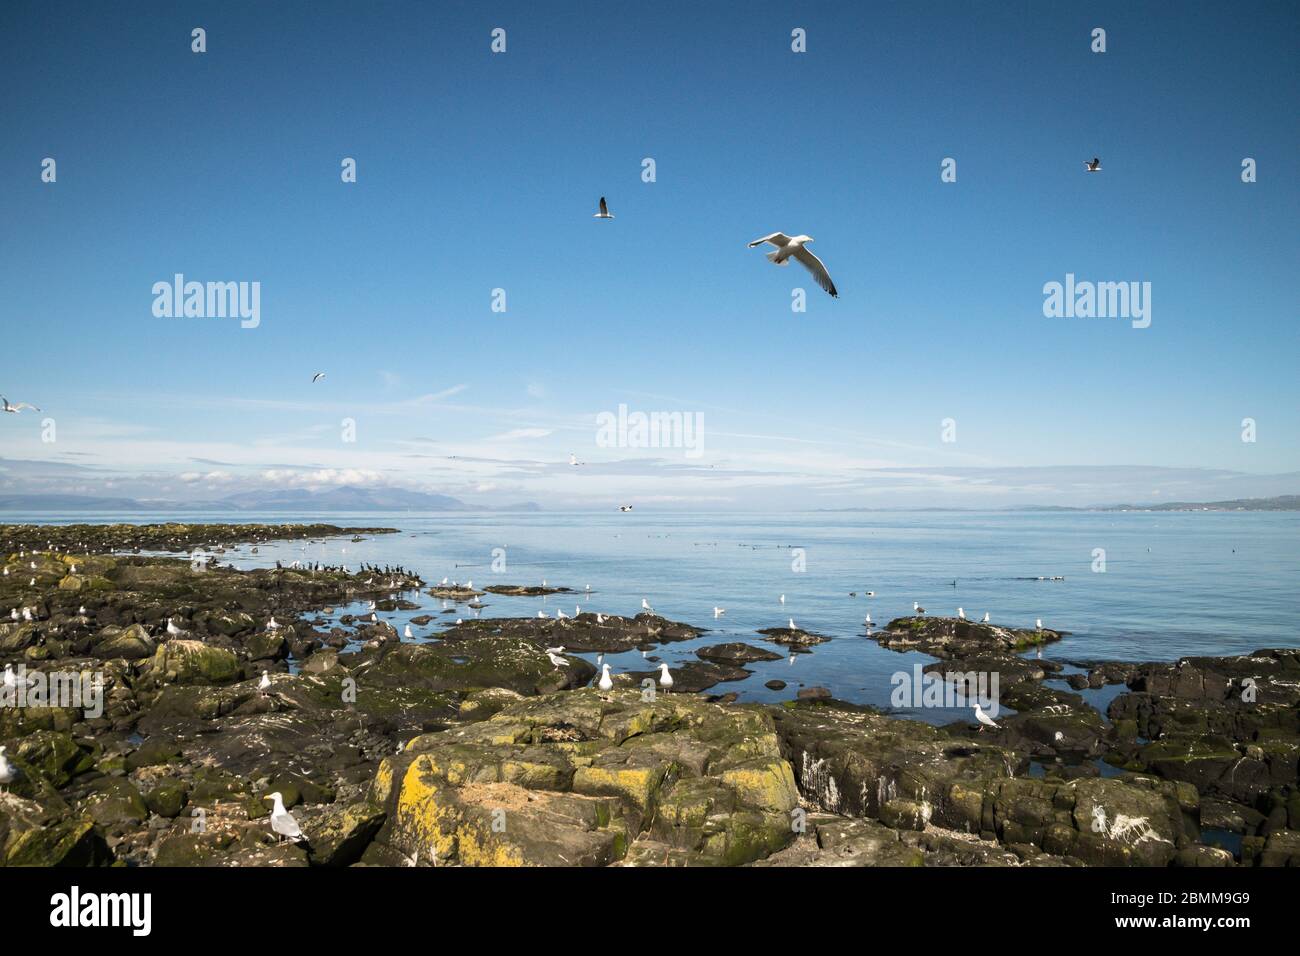 A herring gull (Larus argentatus) flies over a seabird colony on a rocky island, Lady Isle, Scotland, UK Stock Photo